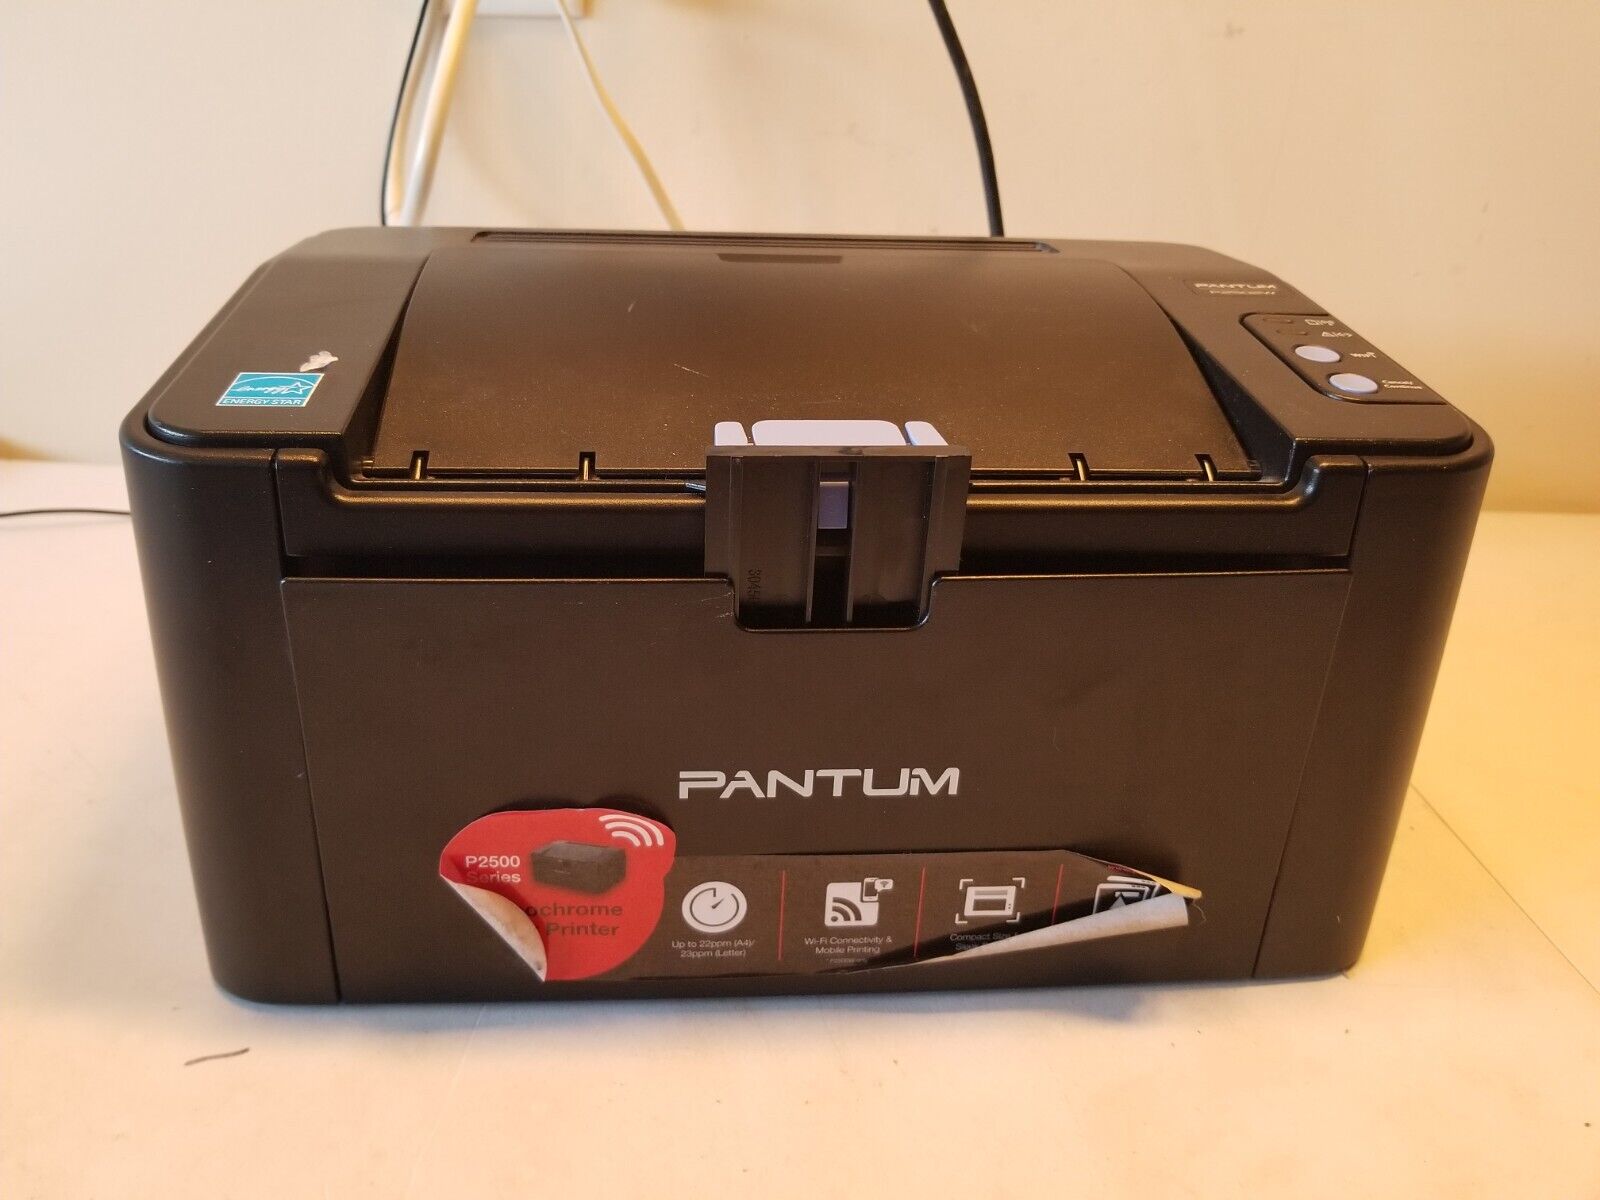 Pantum P2502W Laser Printer Monochrome Wireless Networking Black-WiFi